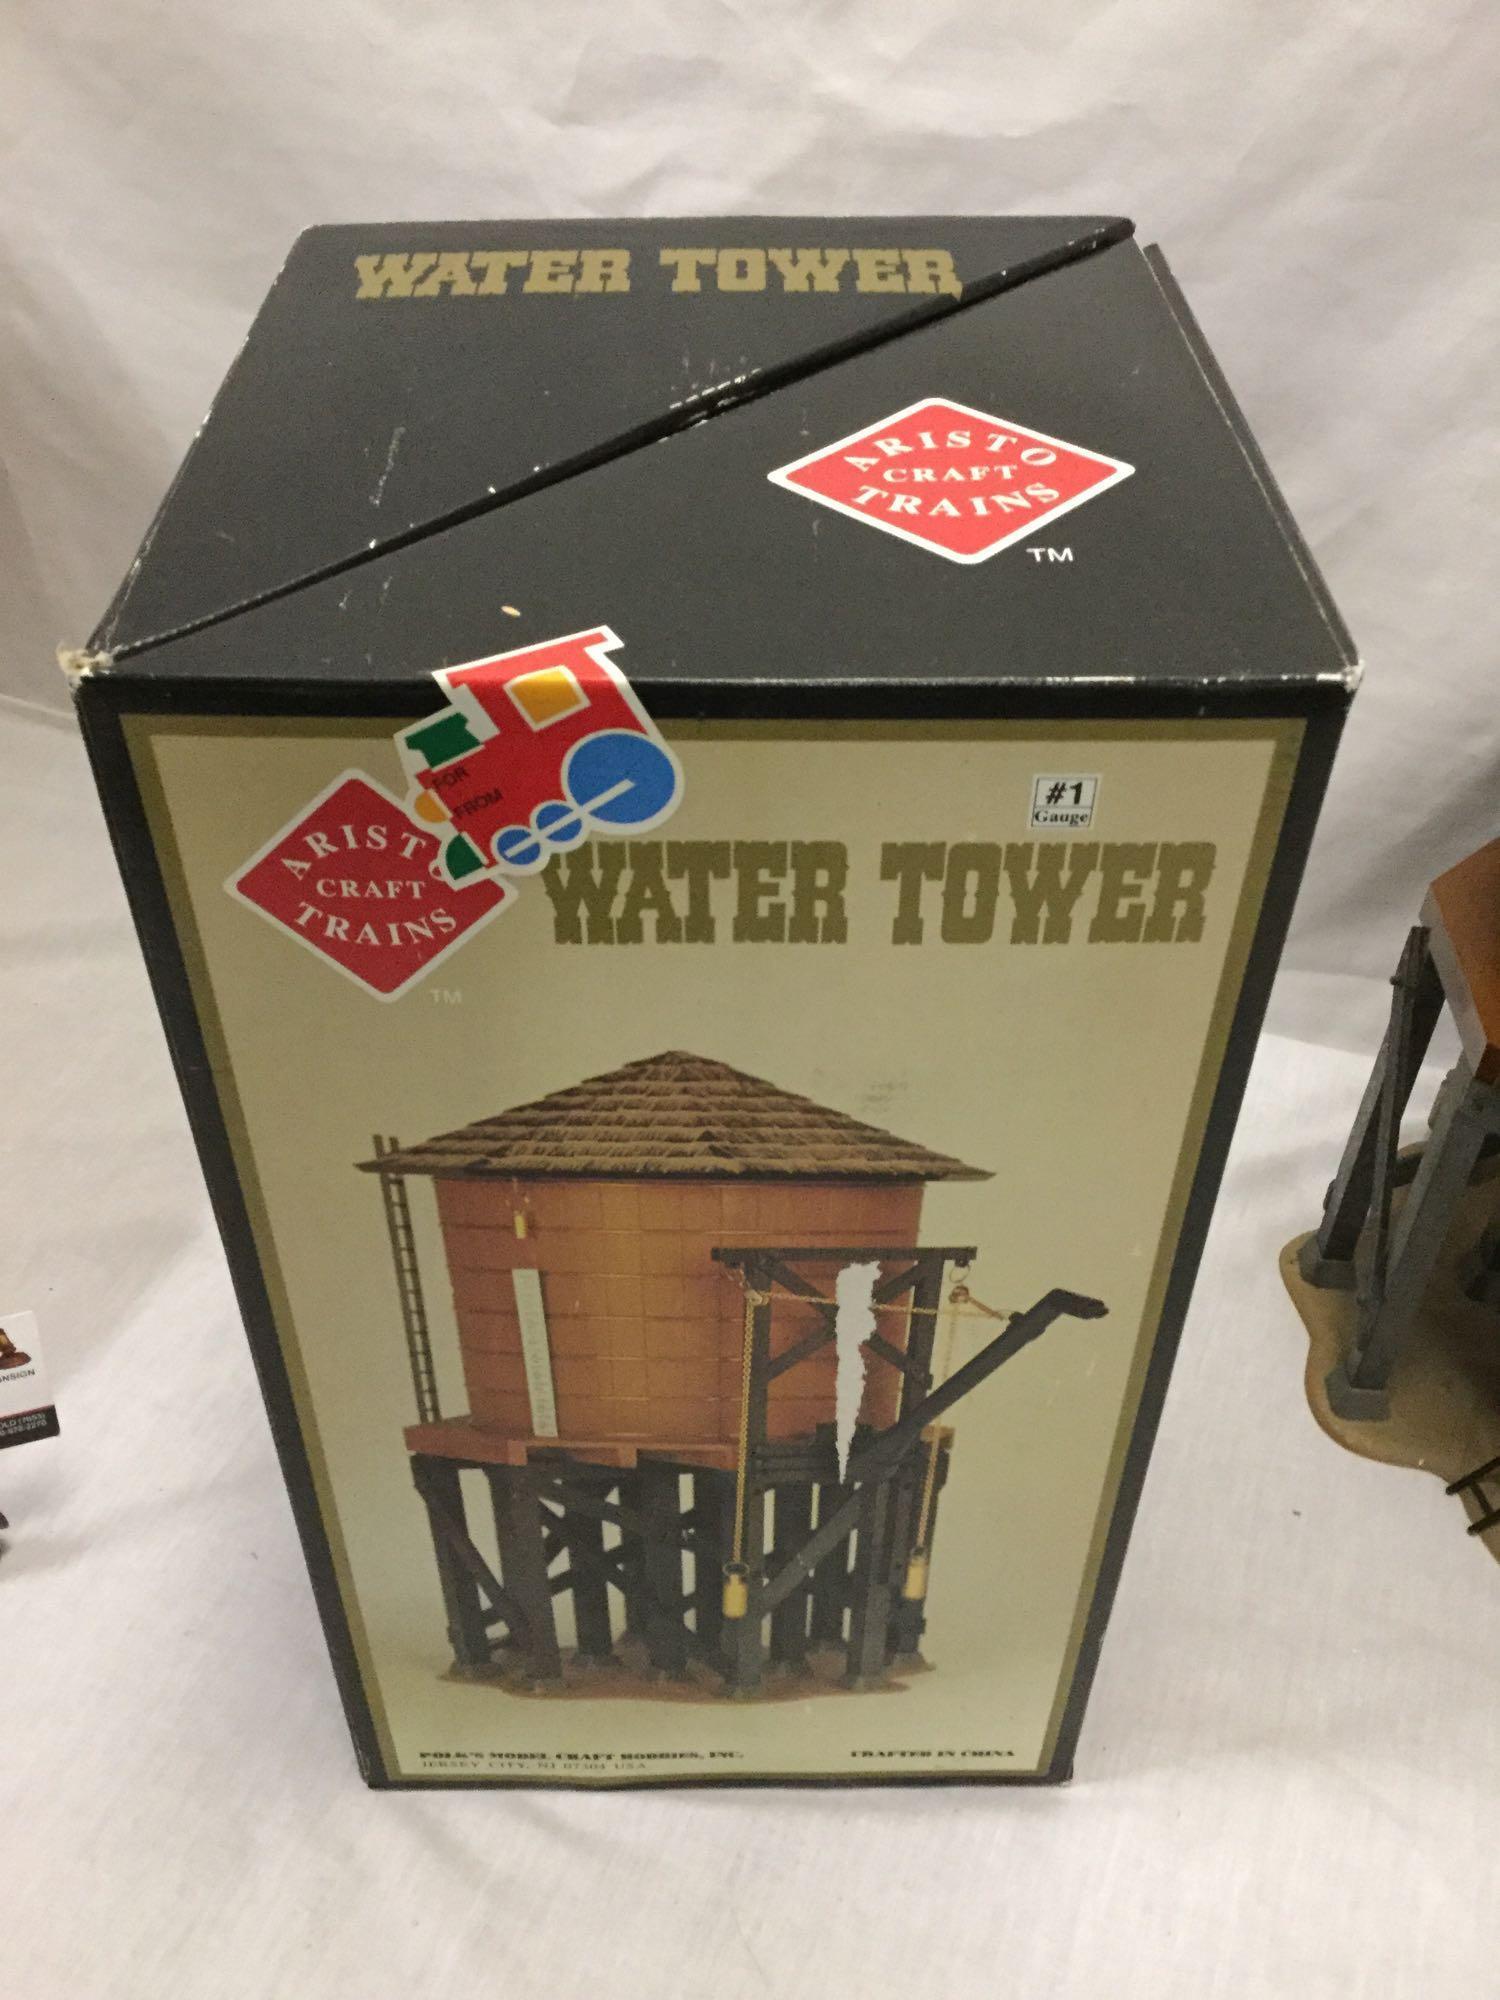 Artisto Craft Trains Art 7103 Water Tower diorama structure in original box.